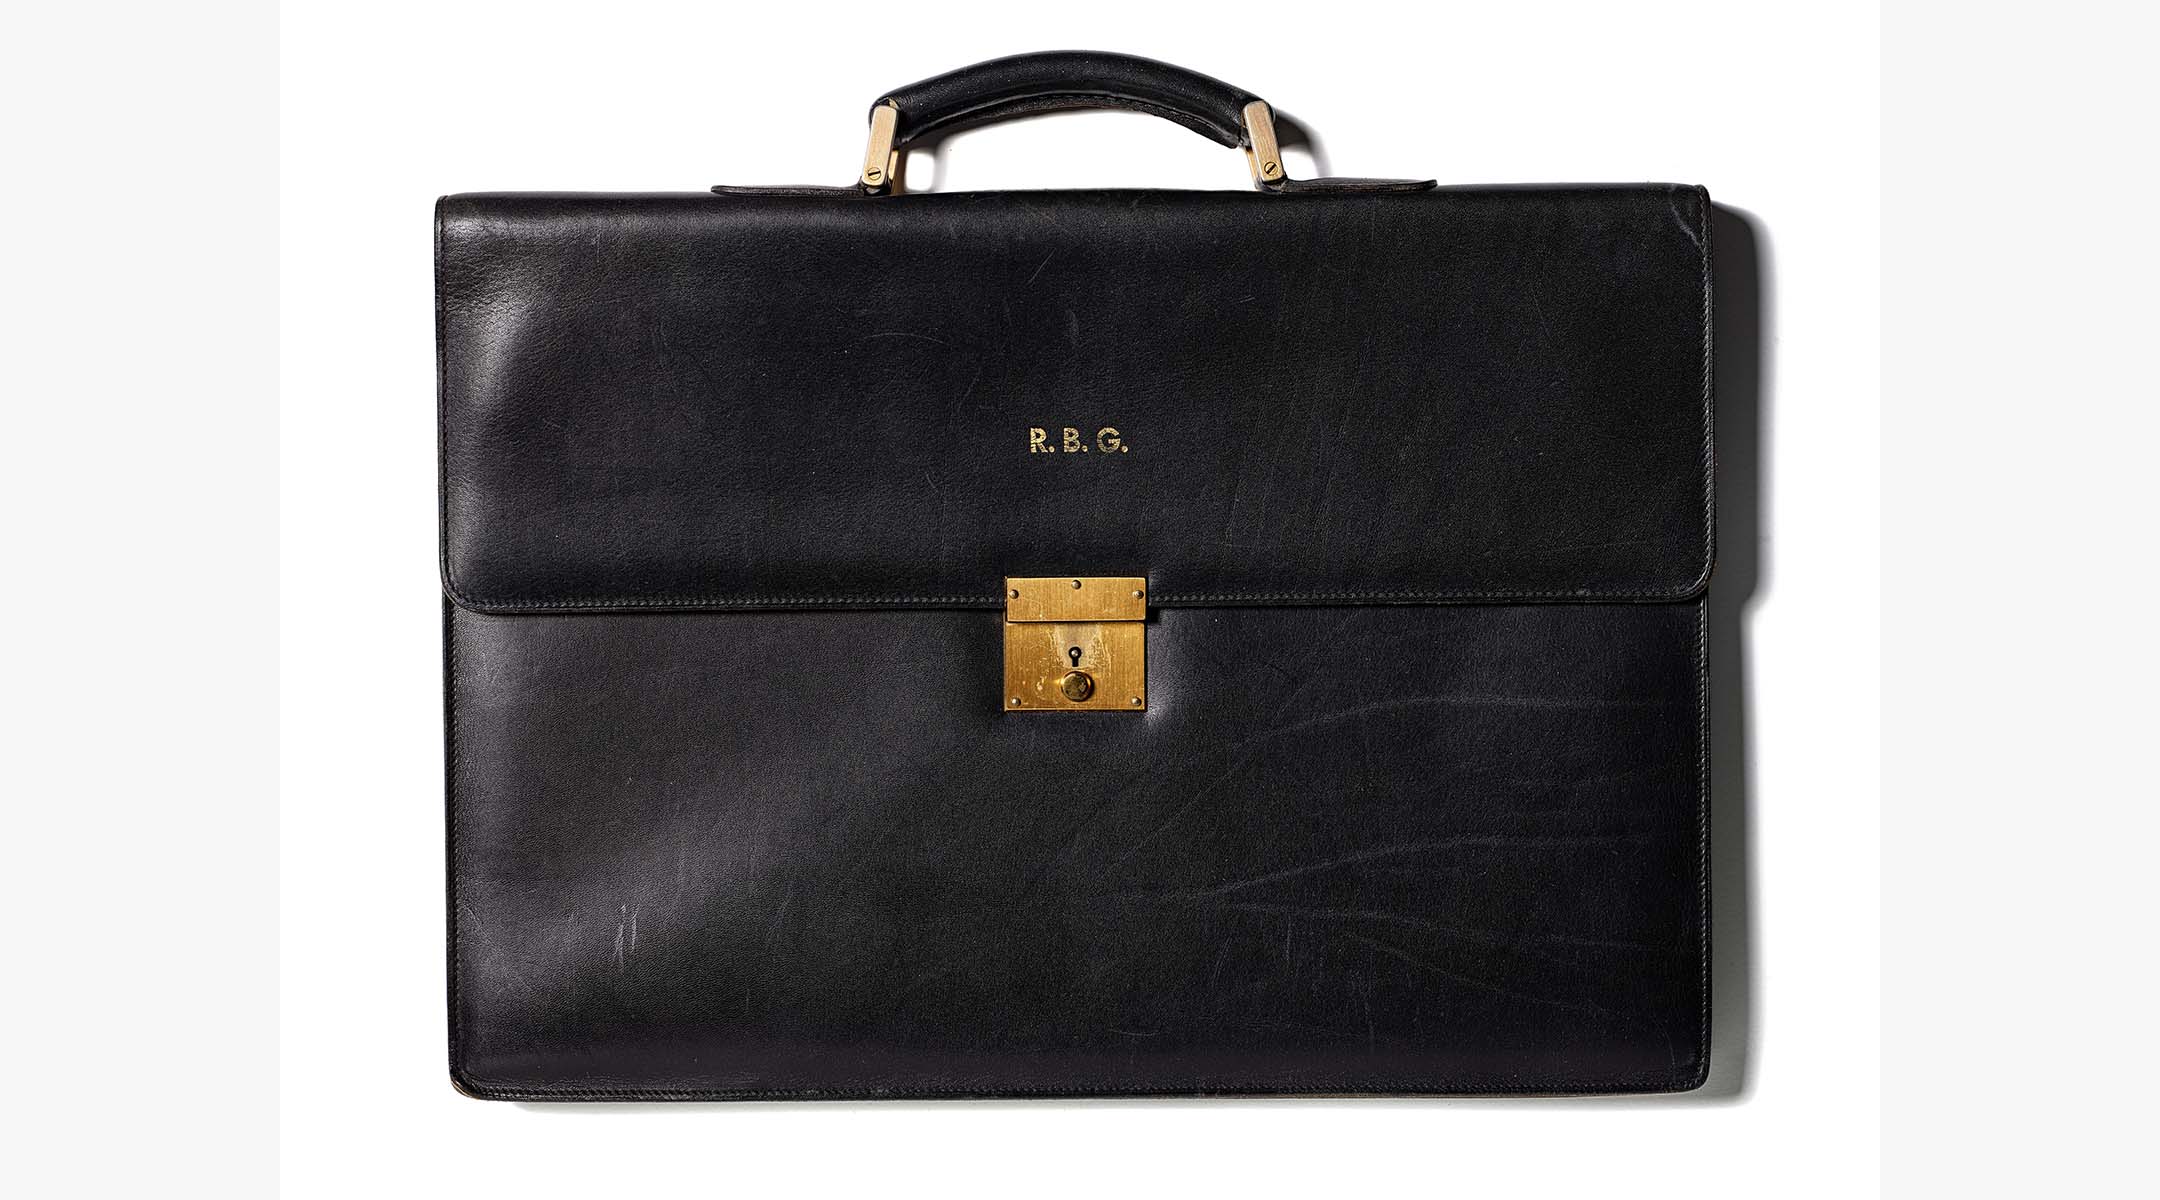 A black leather brief case.